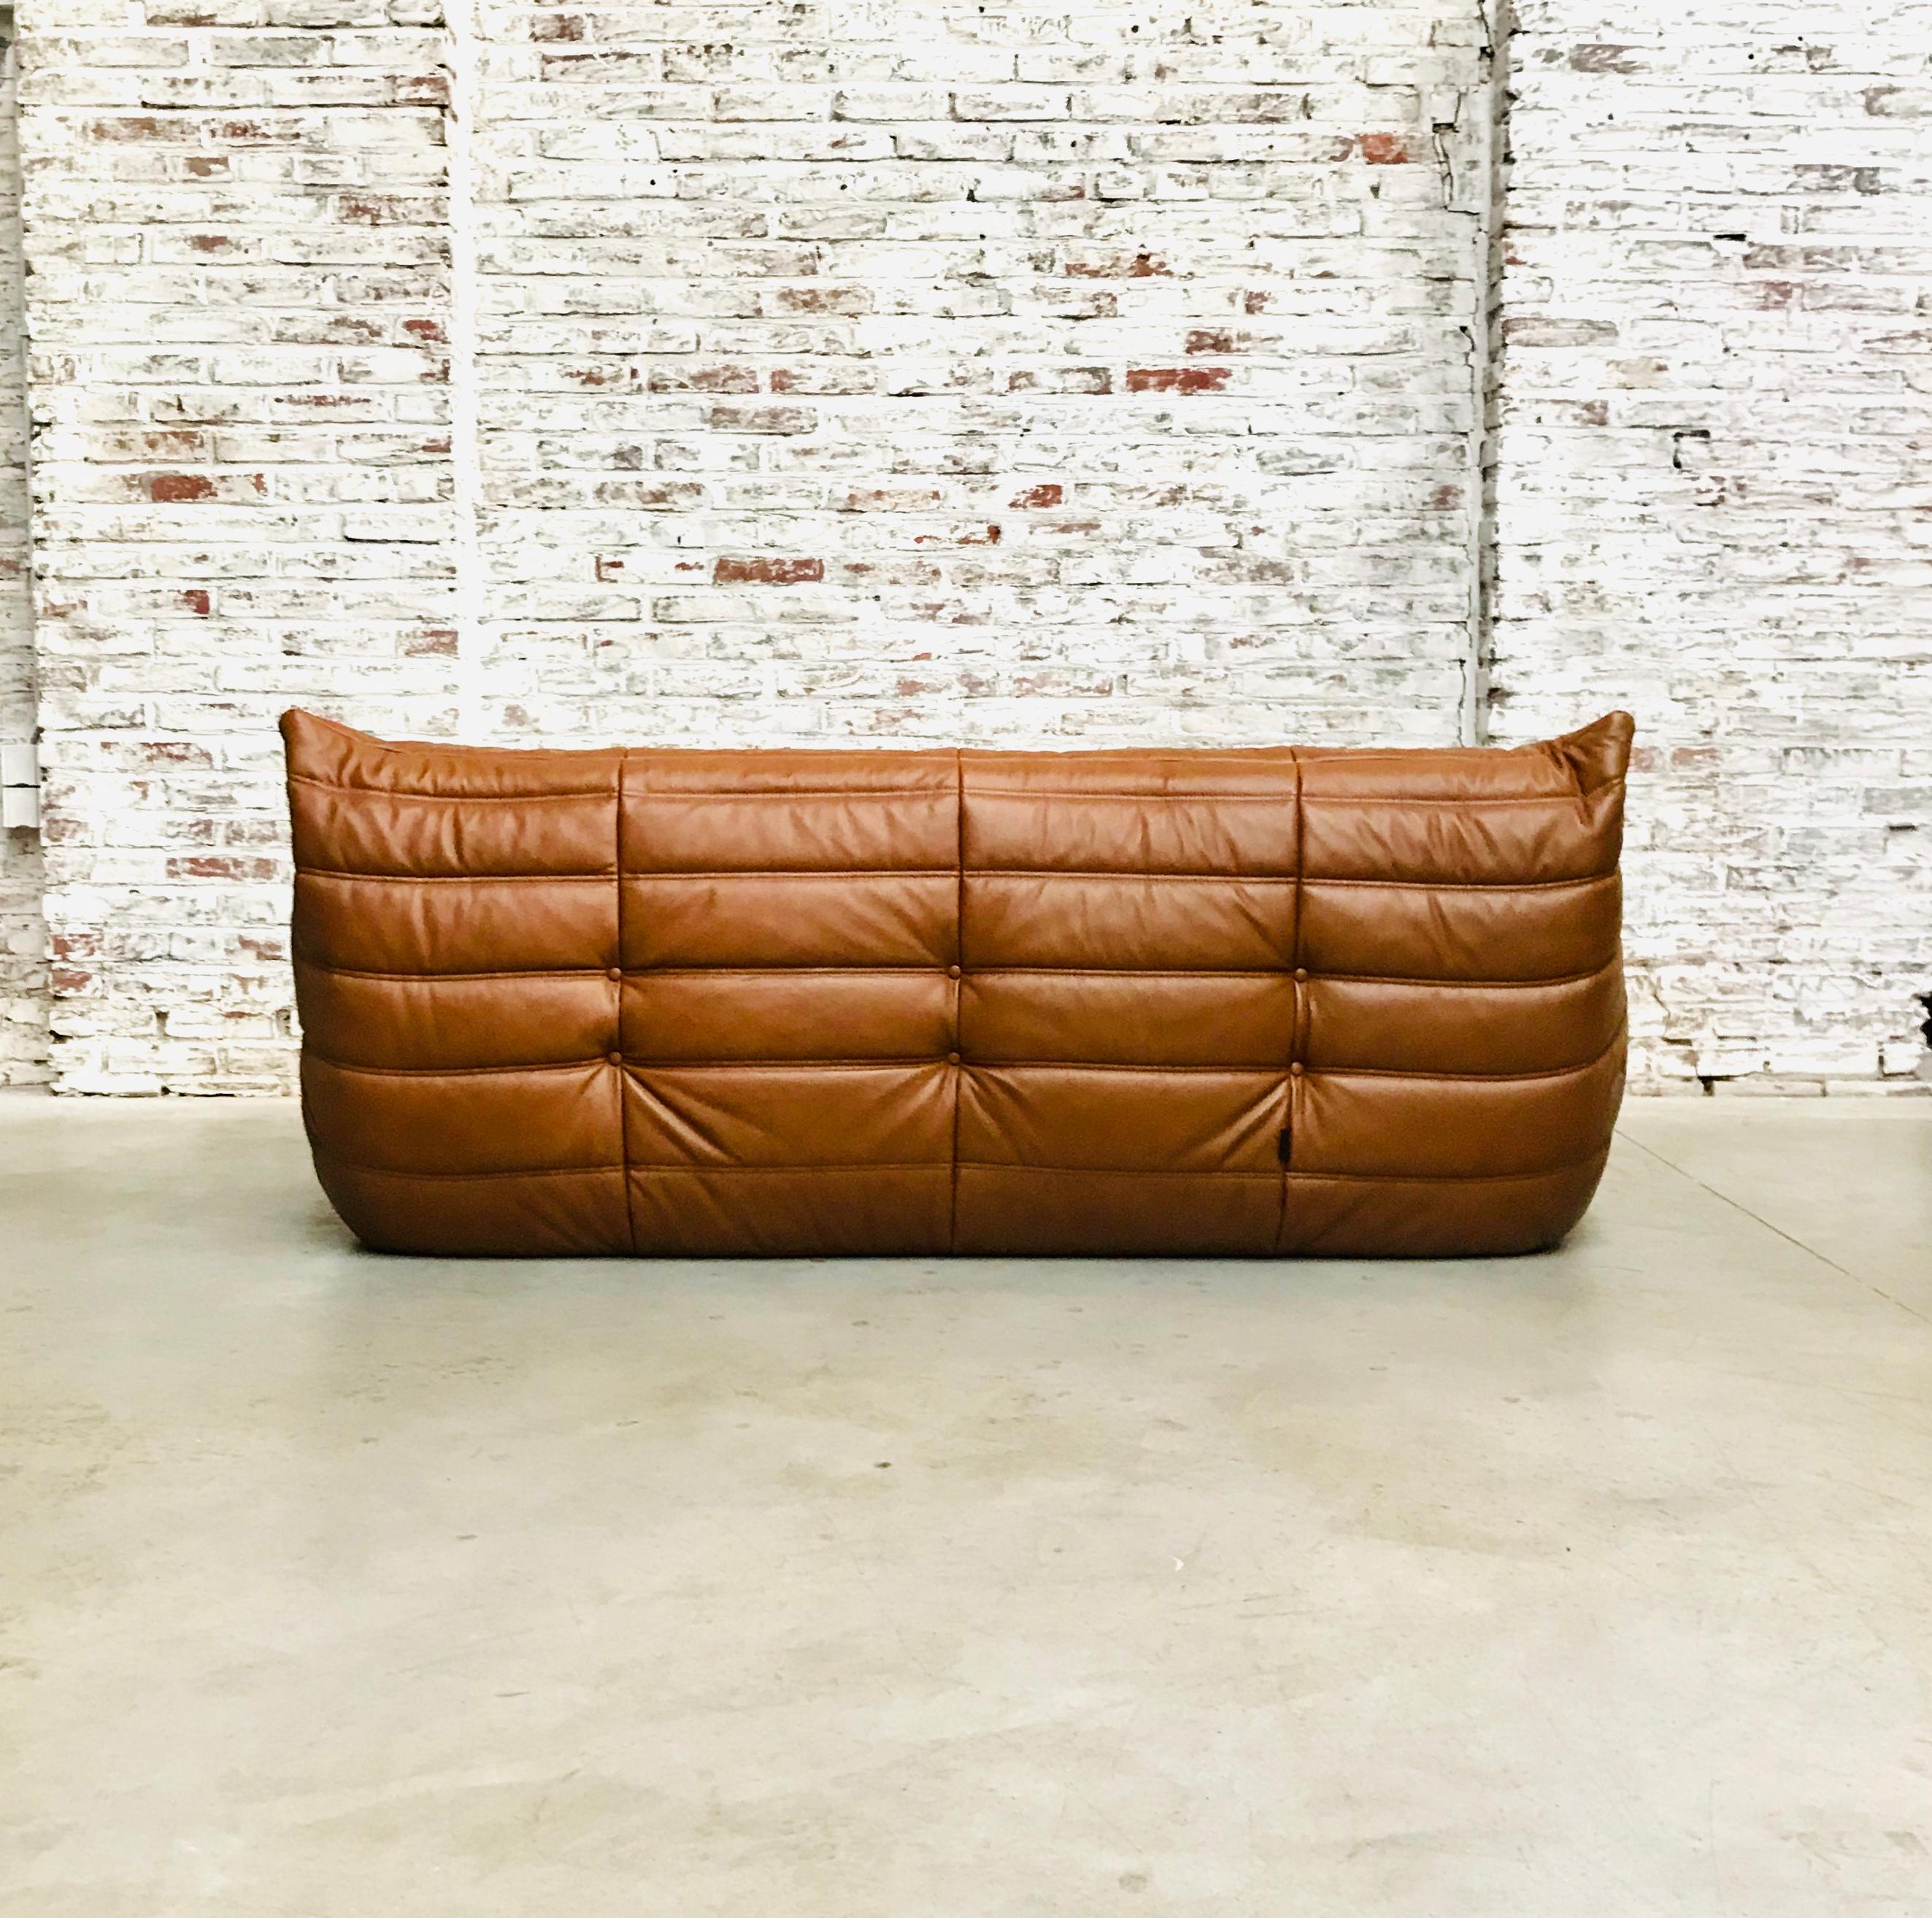 Mid-Century Modern Togo Sofa in Dark Brown Cognac Leather by Michel Ducaroy for Ligne Roset